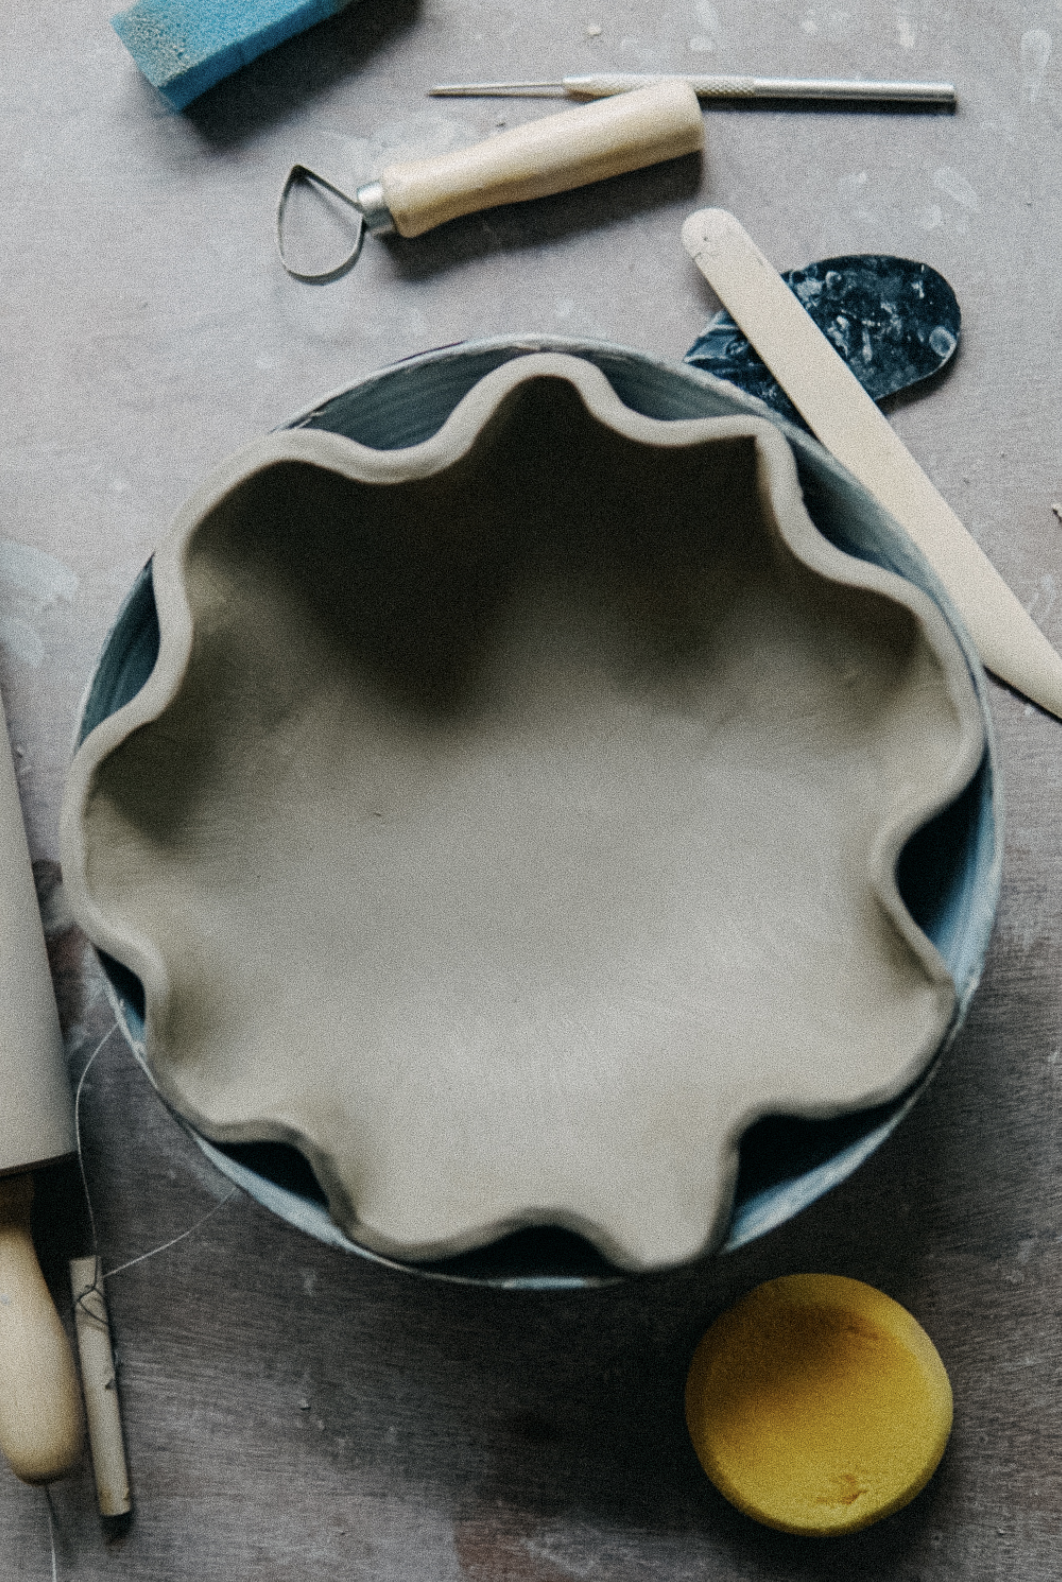 Ceramics Workshop Amsterdam - taster class (beginner)